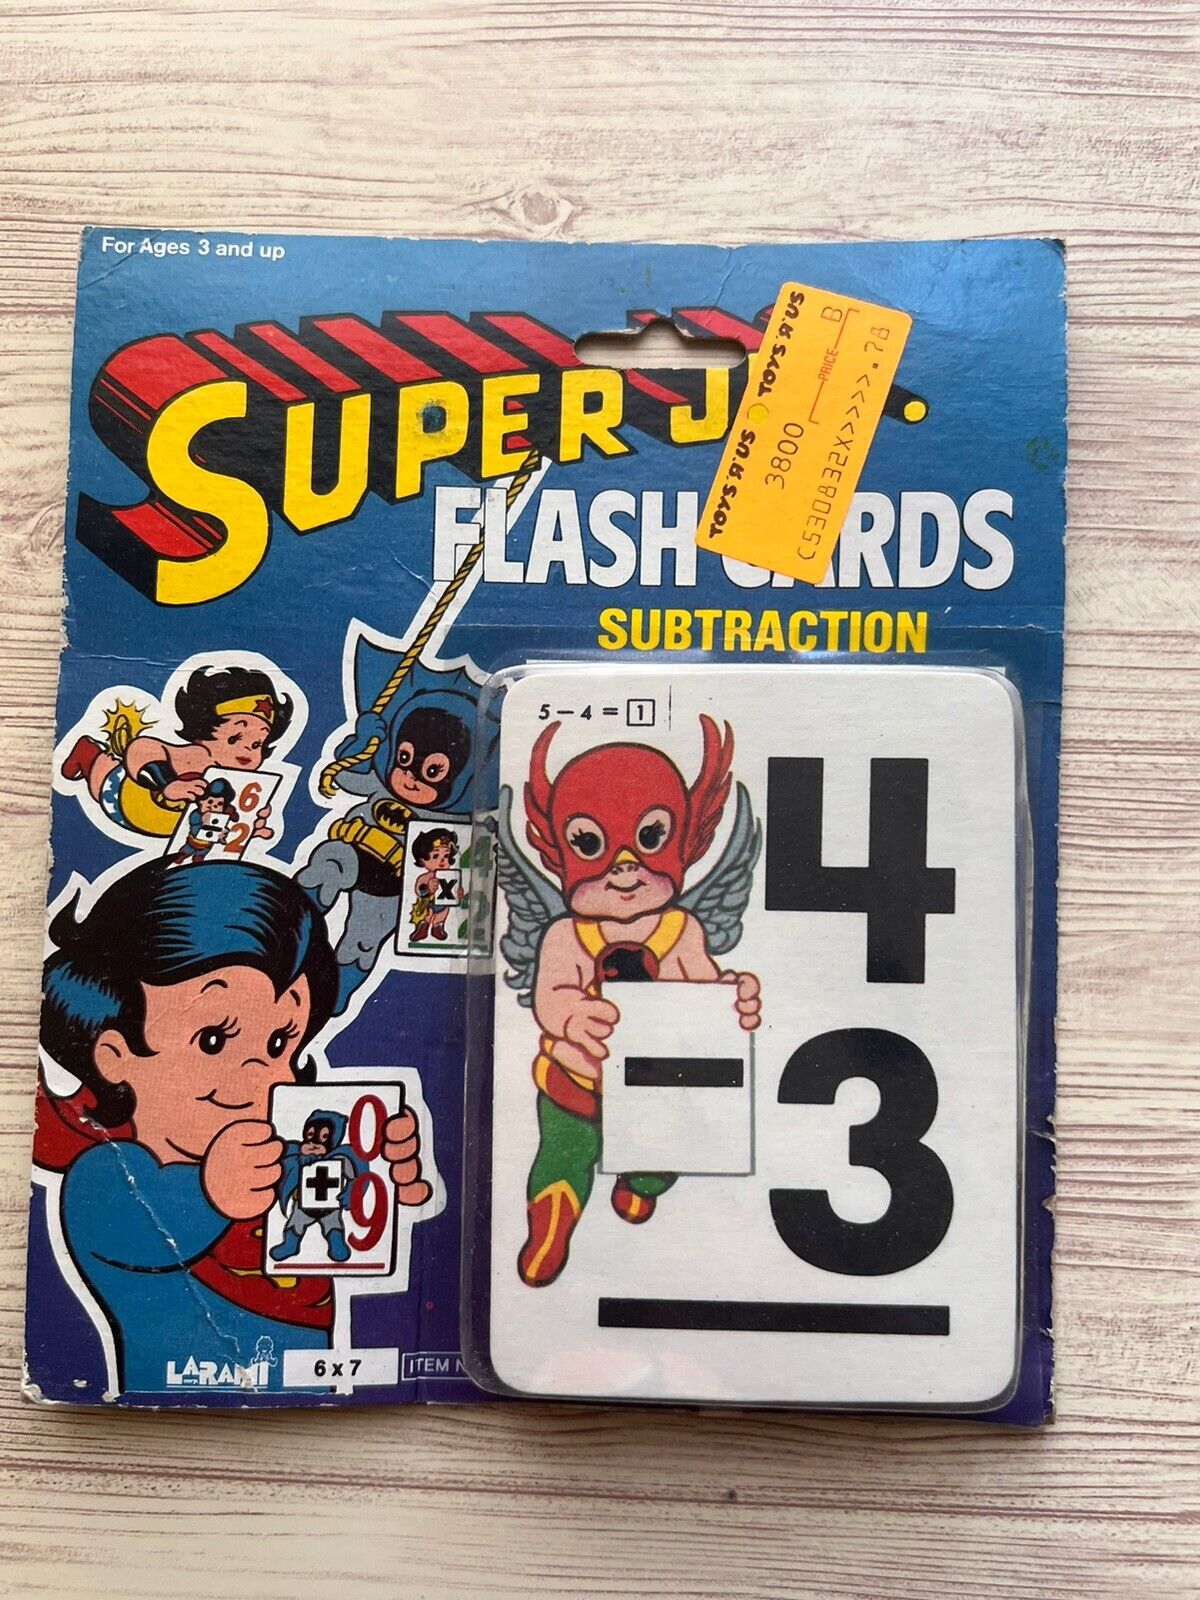 VINTAGE RARE Super Jr. Justice League Subtraction Flashcards NOS SEALED (SB)